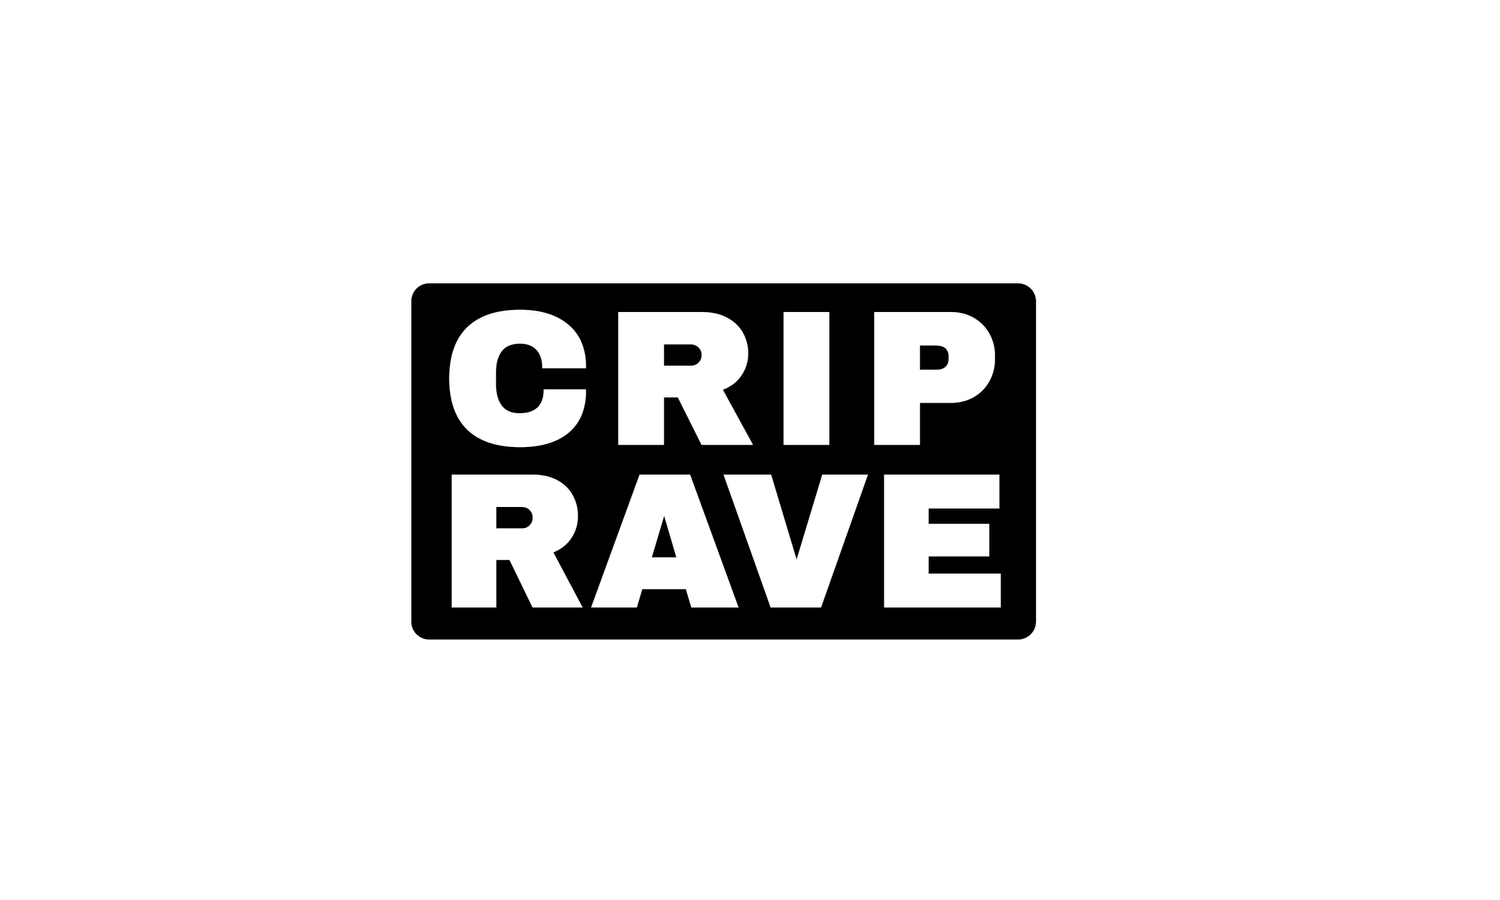 Crip Rave